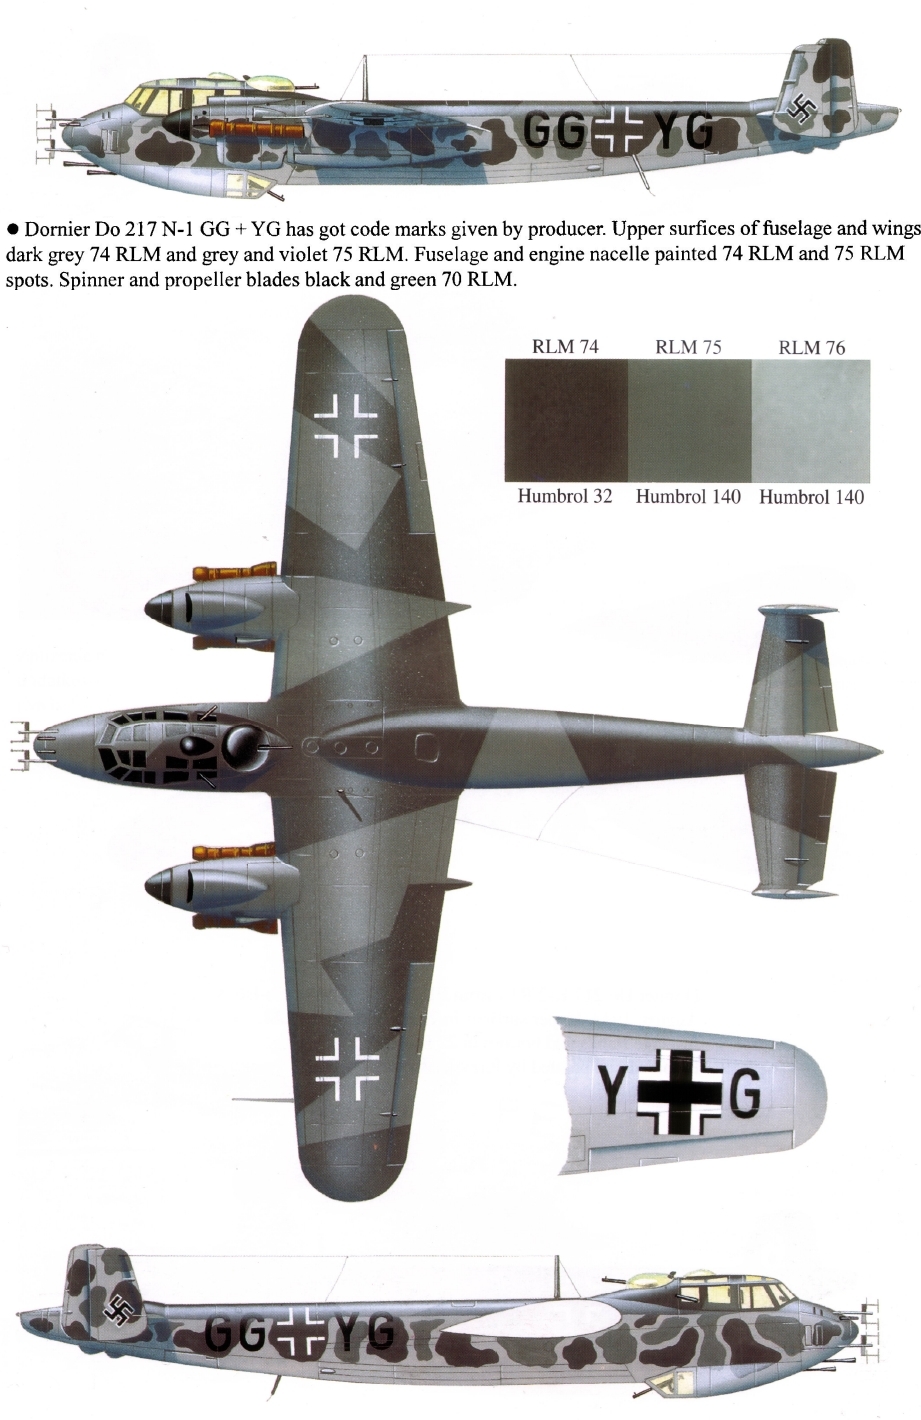 1706457212 652 DORNIER Do 217 Nighthawks of the Luftwaffe